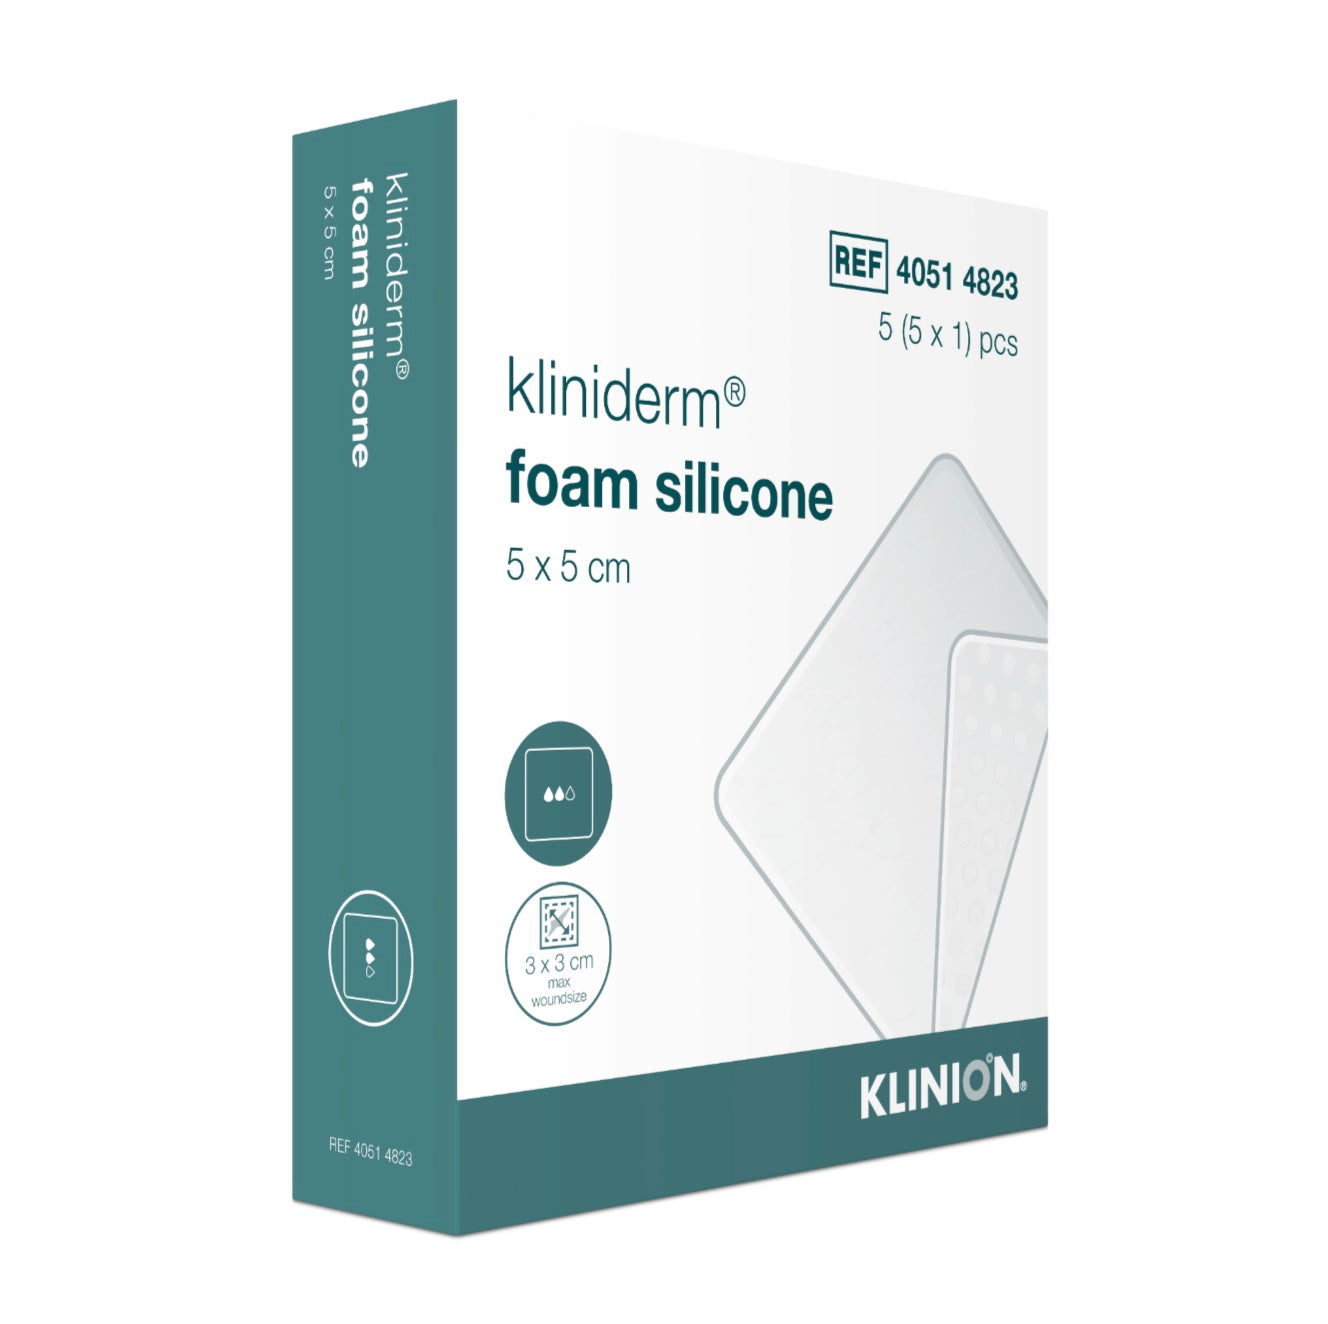 KLINION Kliniderm foam silicone 5 cm x 5 cm silikonivaahtosidos